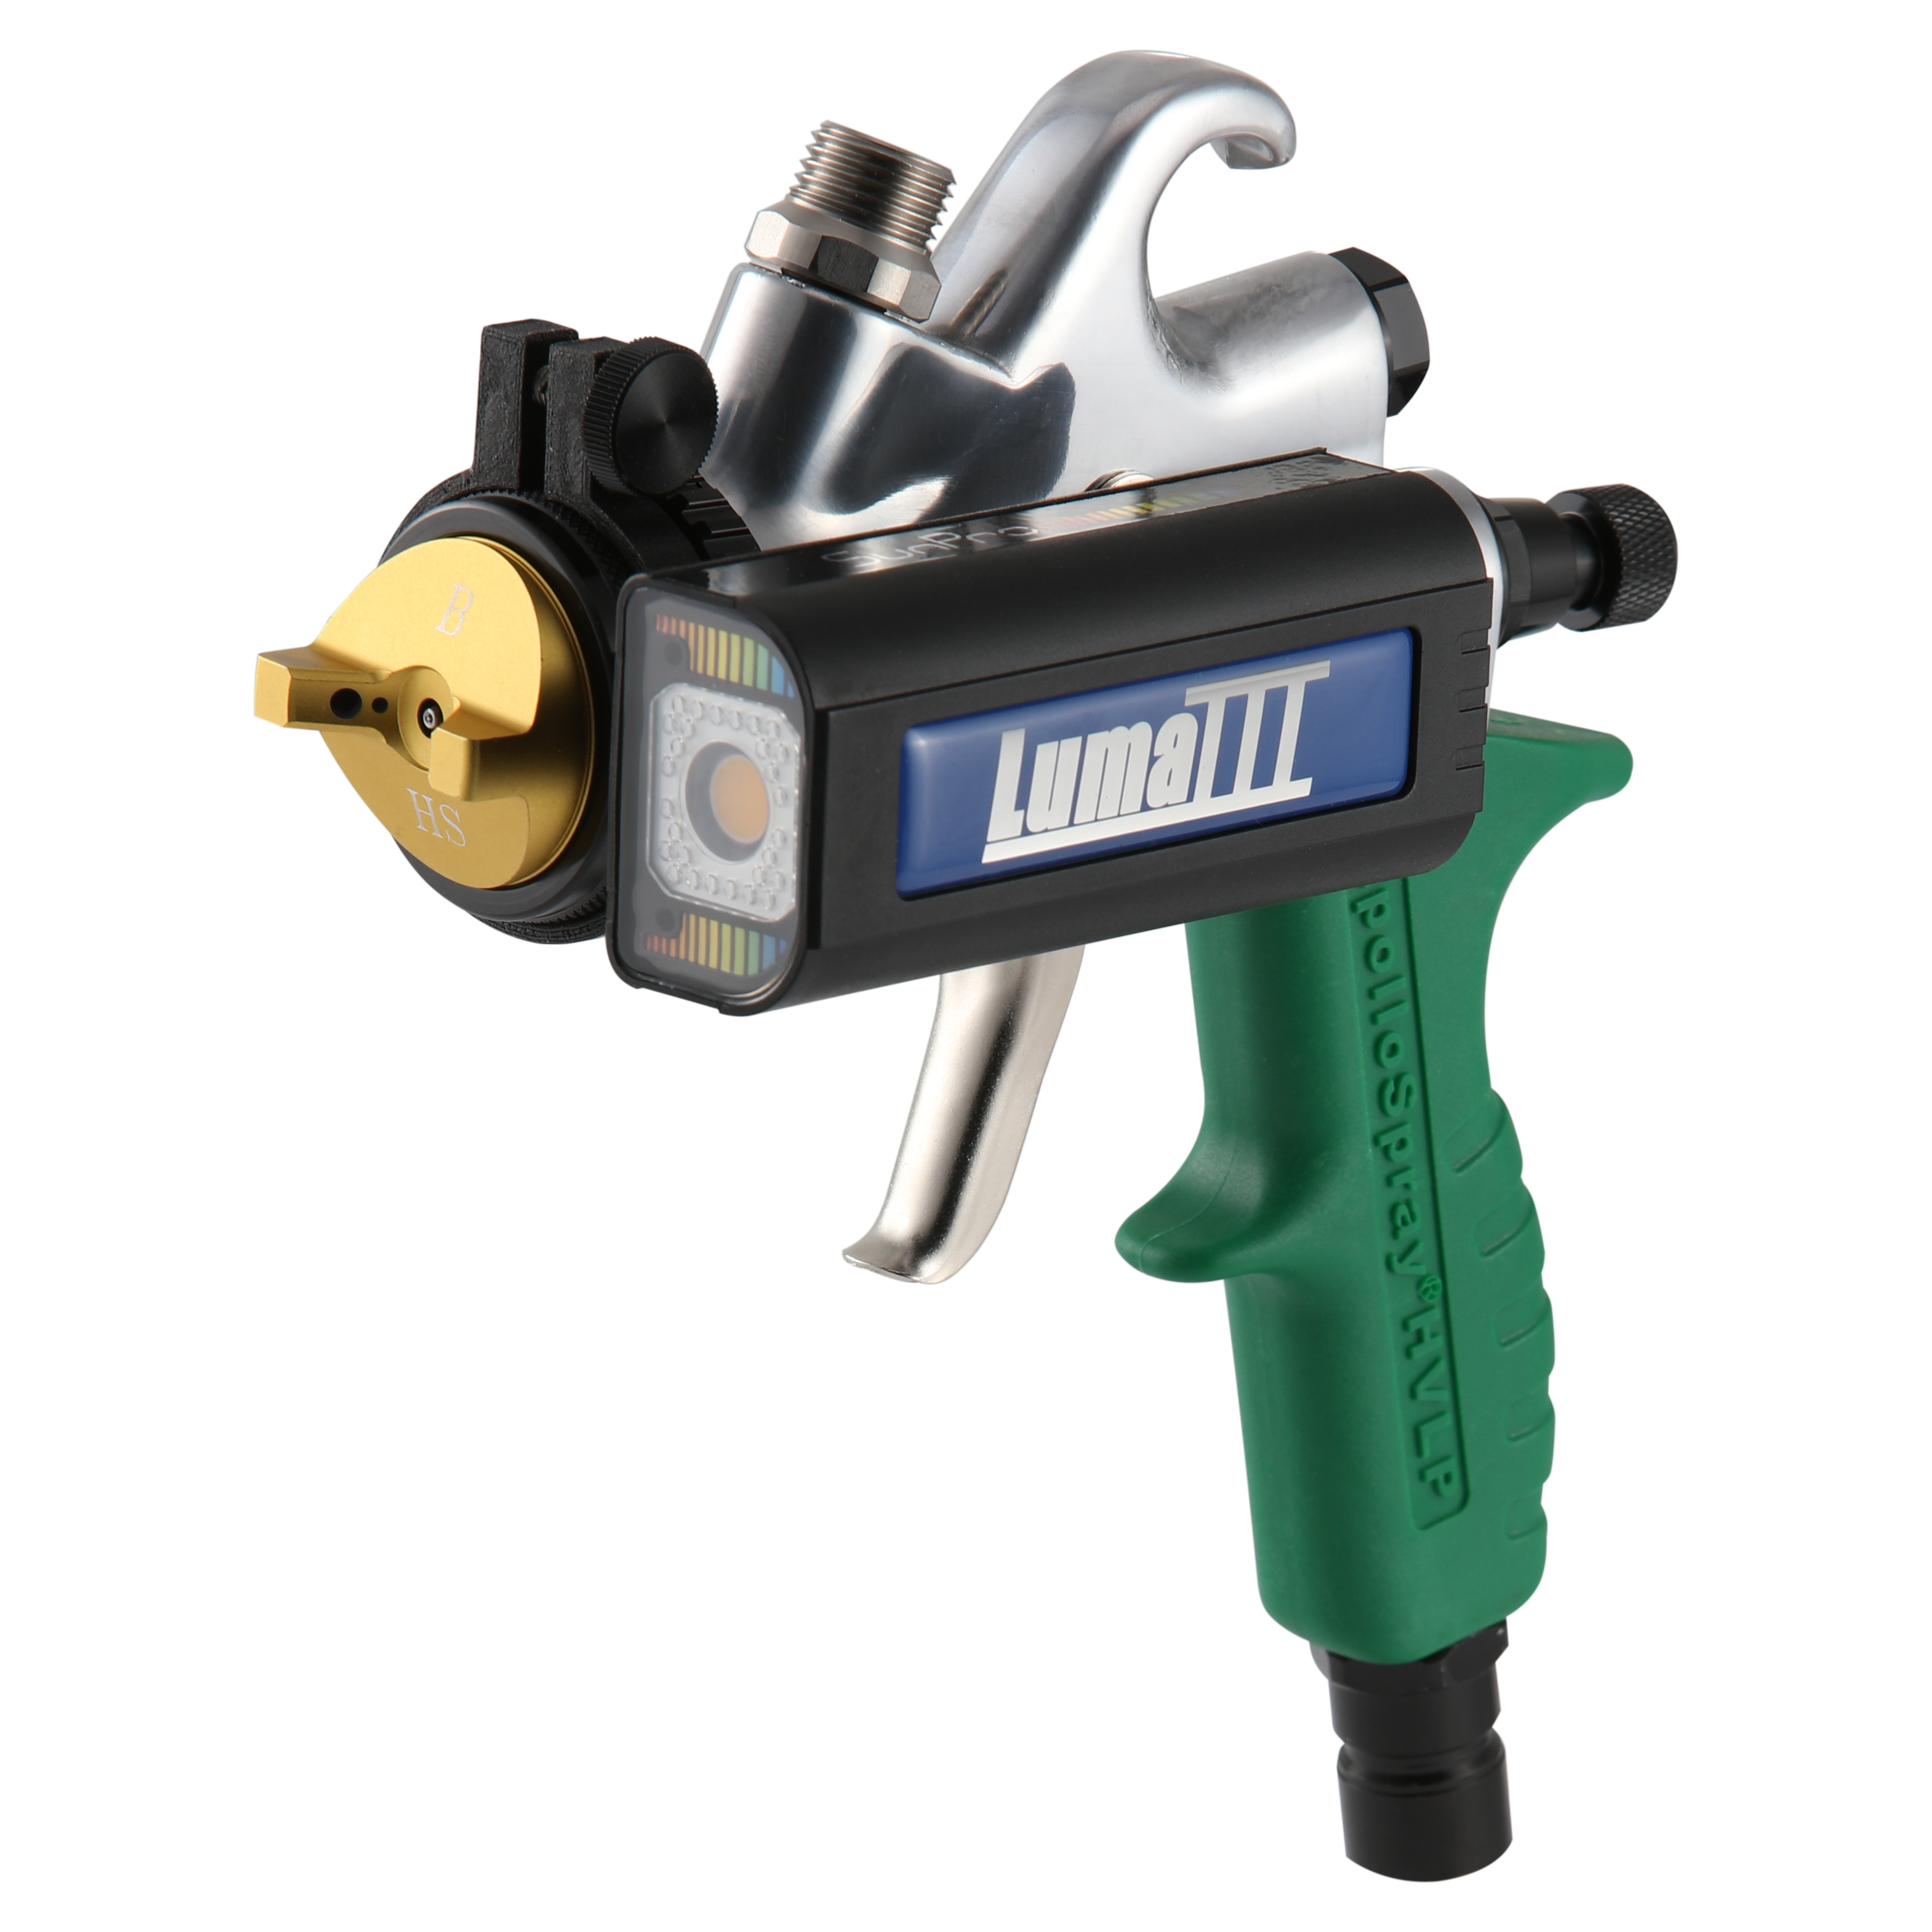 LUMAIII SunPro Light with Maxi-Miser Spray Gun Mounting Attachment